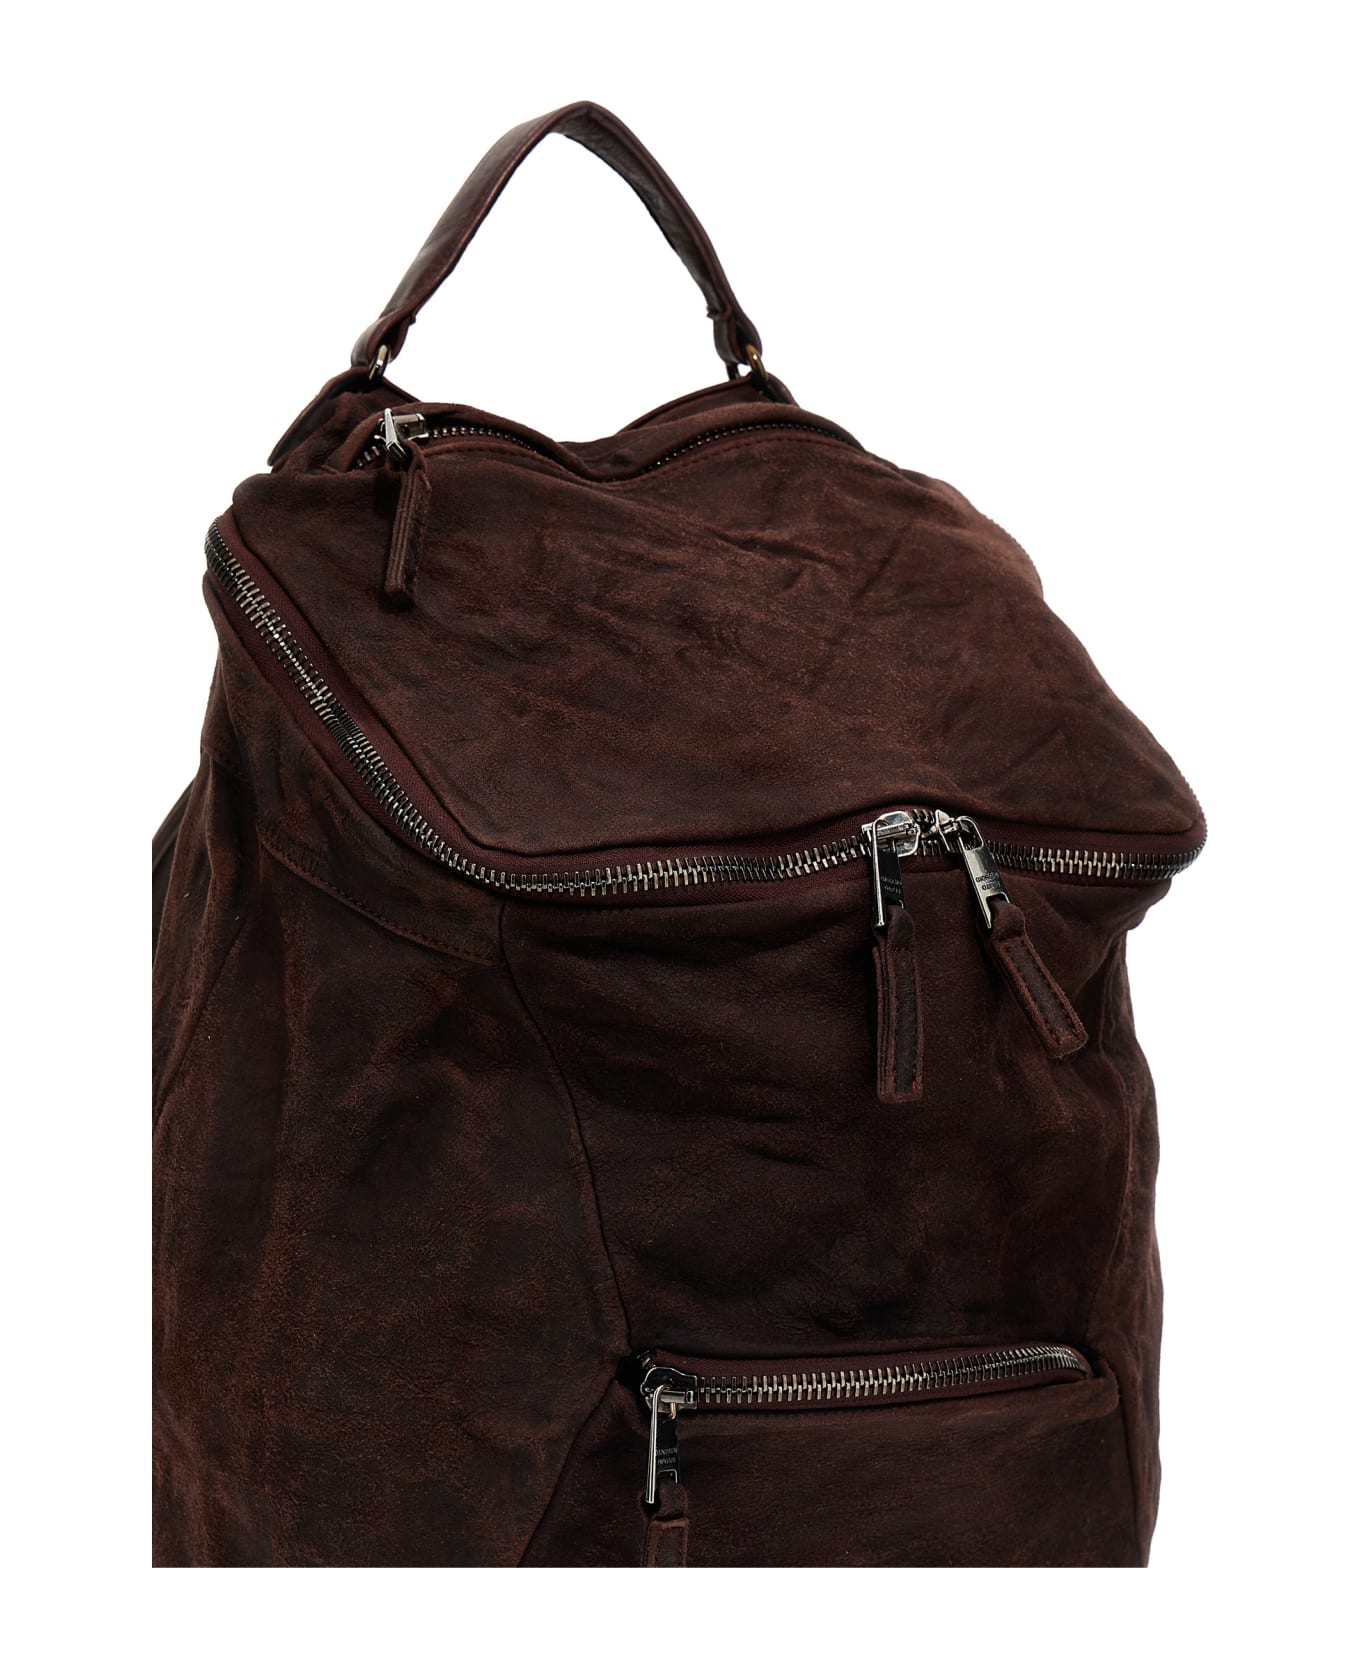 Giorgio Brato Leather Backpack - Bordeaux